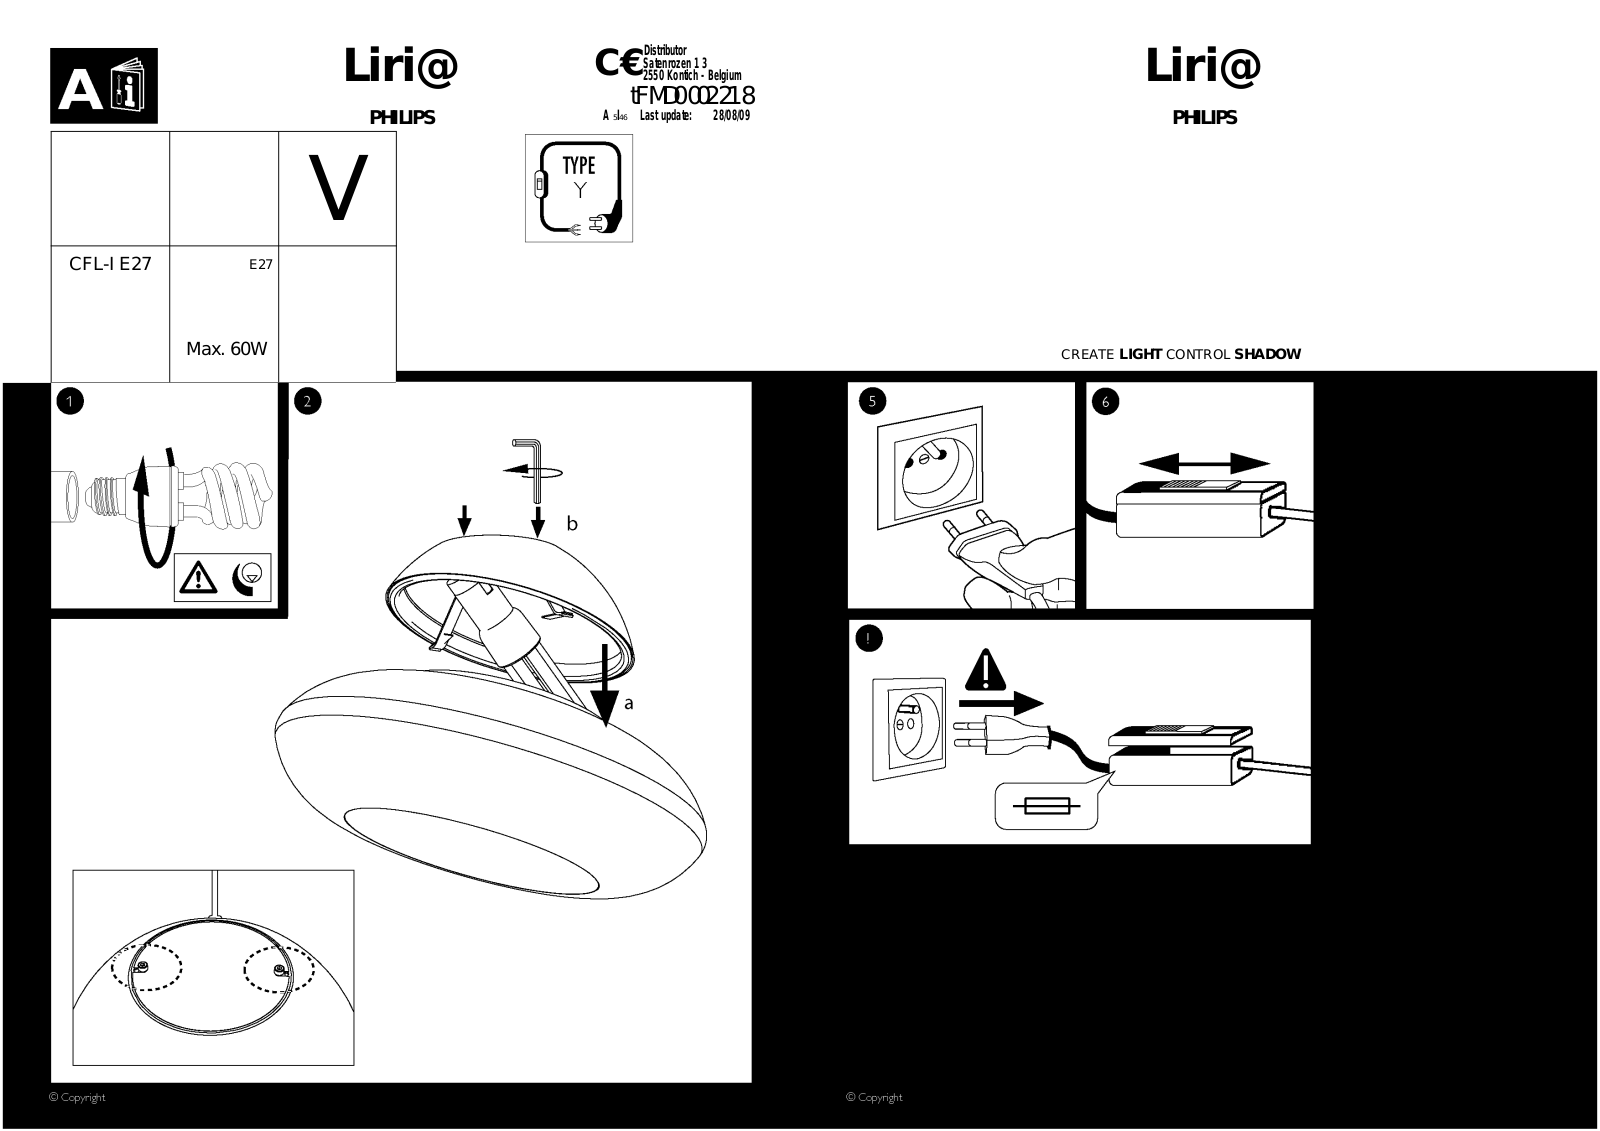 Philips Lirio Lampe à poser User Manual